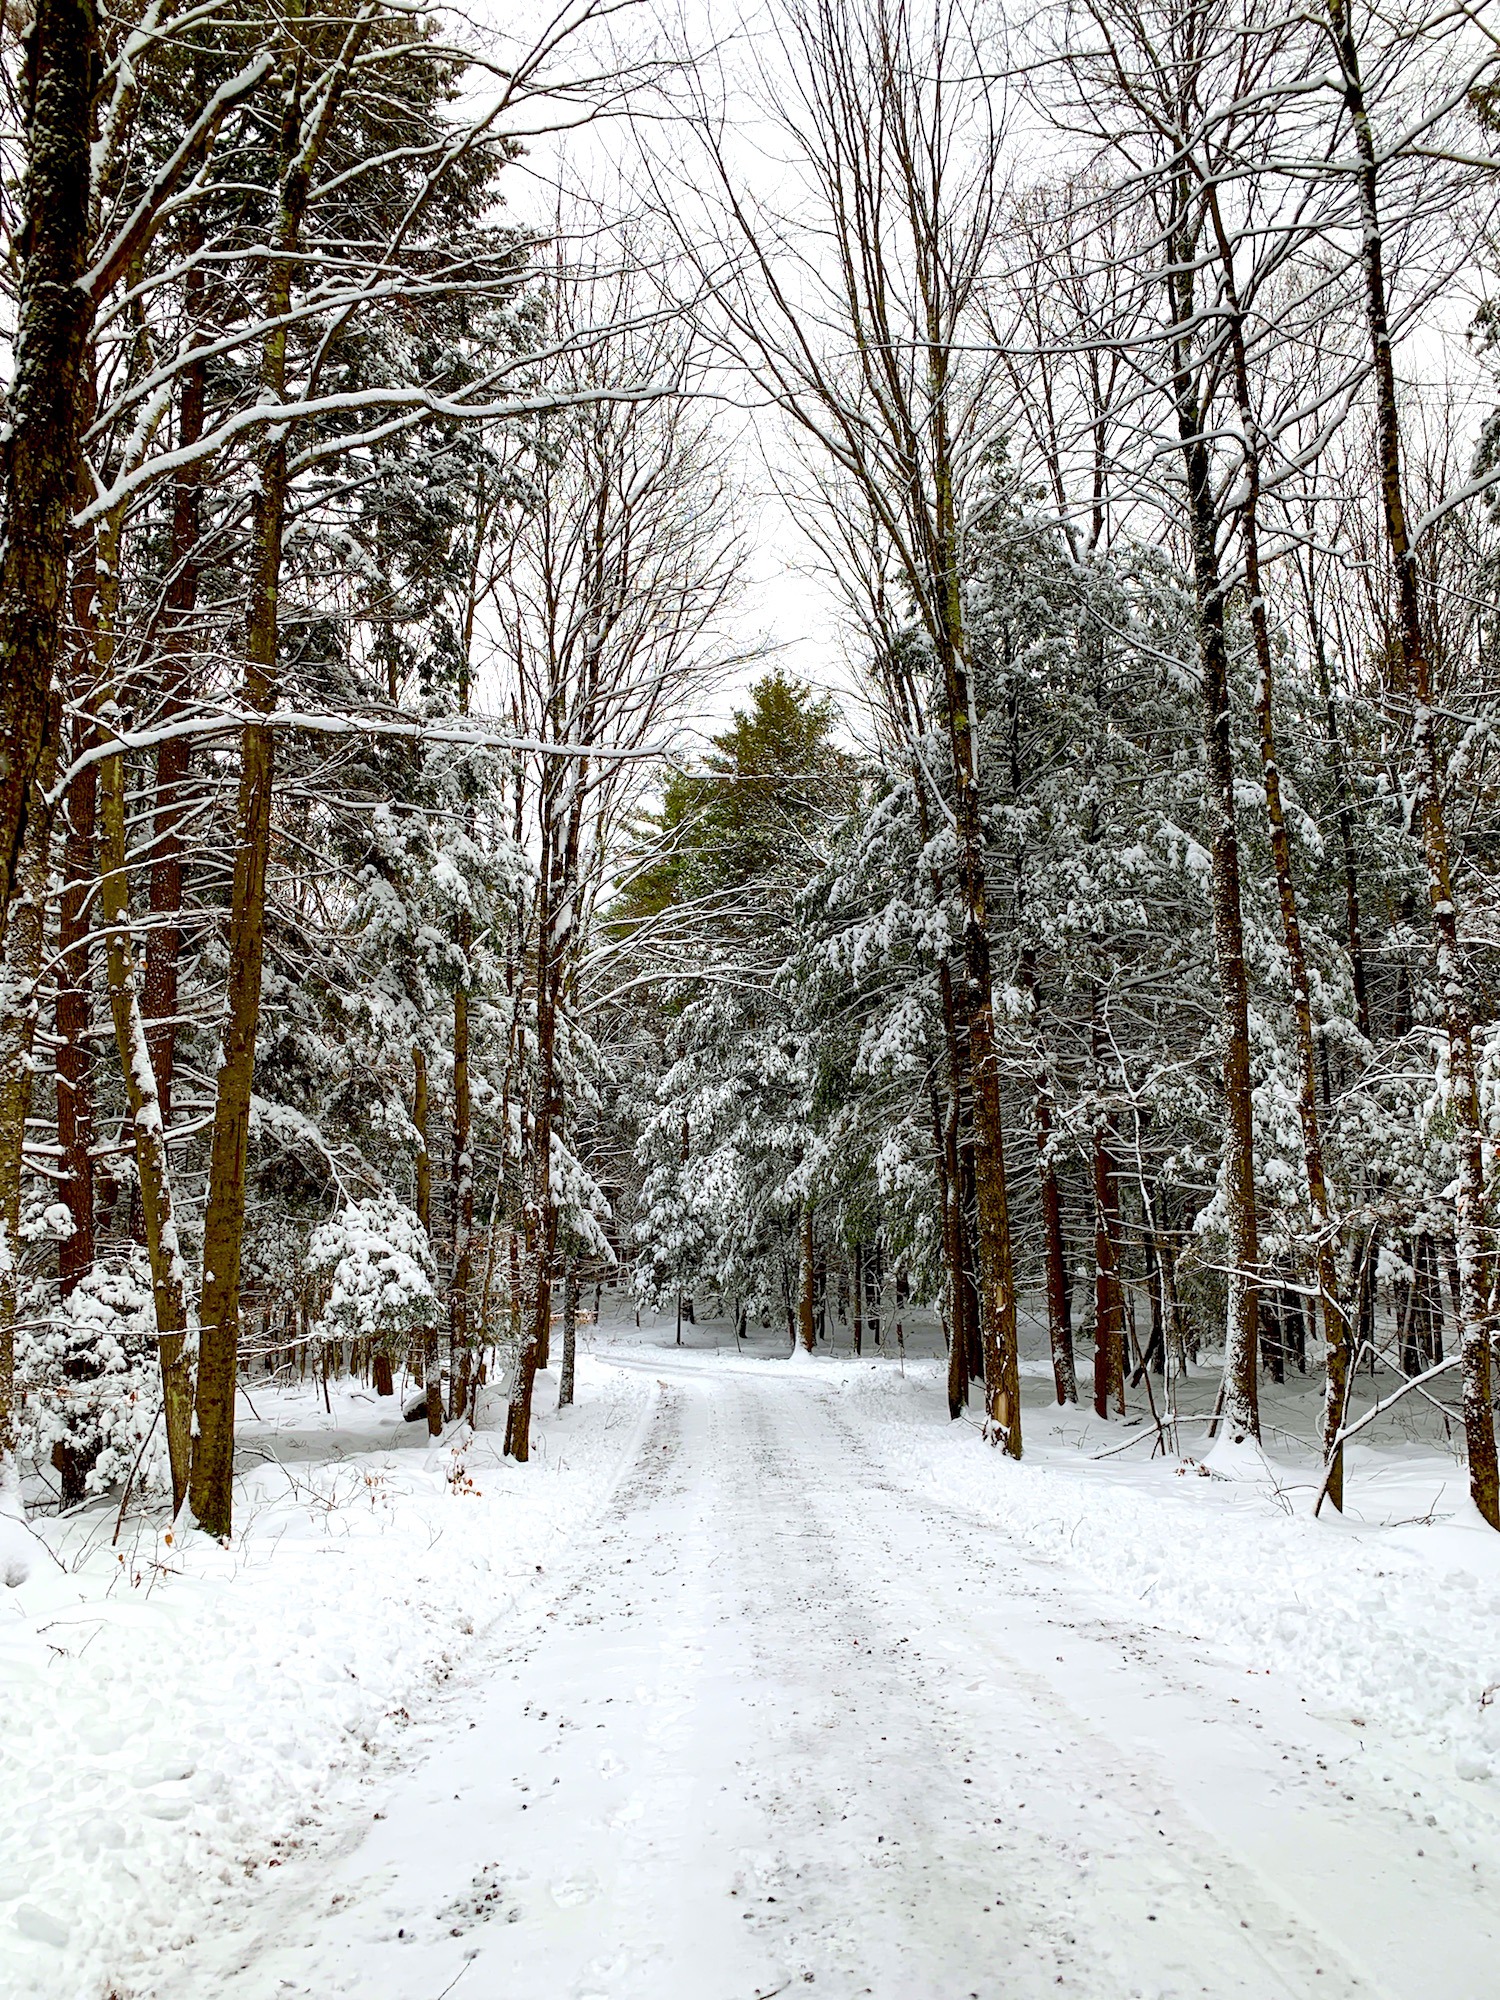 Snow Adirondack road - winter 2019